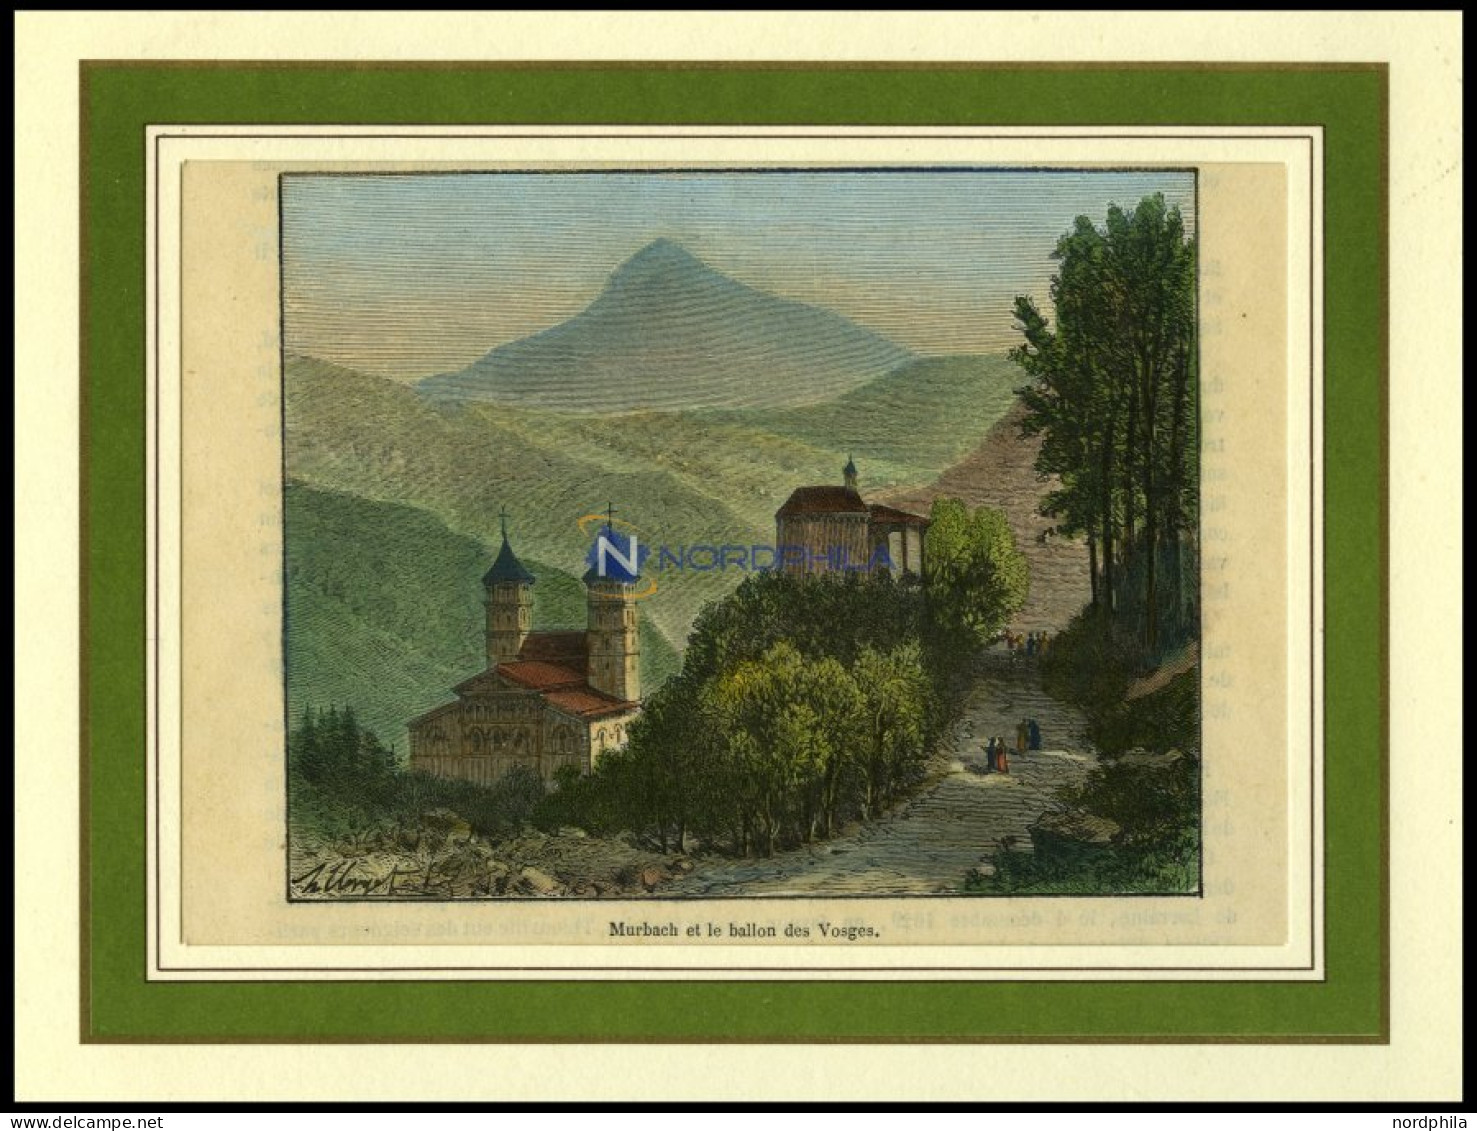 MURBACH, Gesamtansicht, Kolorierter Holzstich Aus Malte-Brun Um 1880 - Litografia